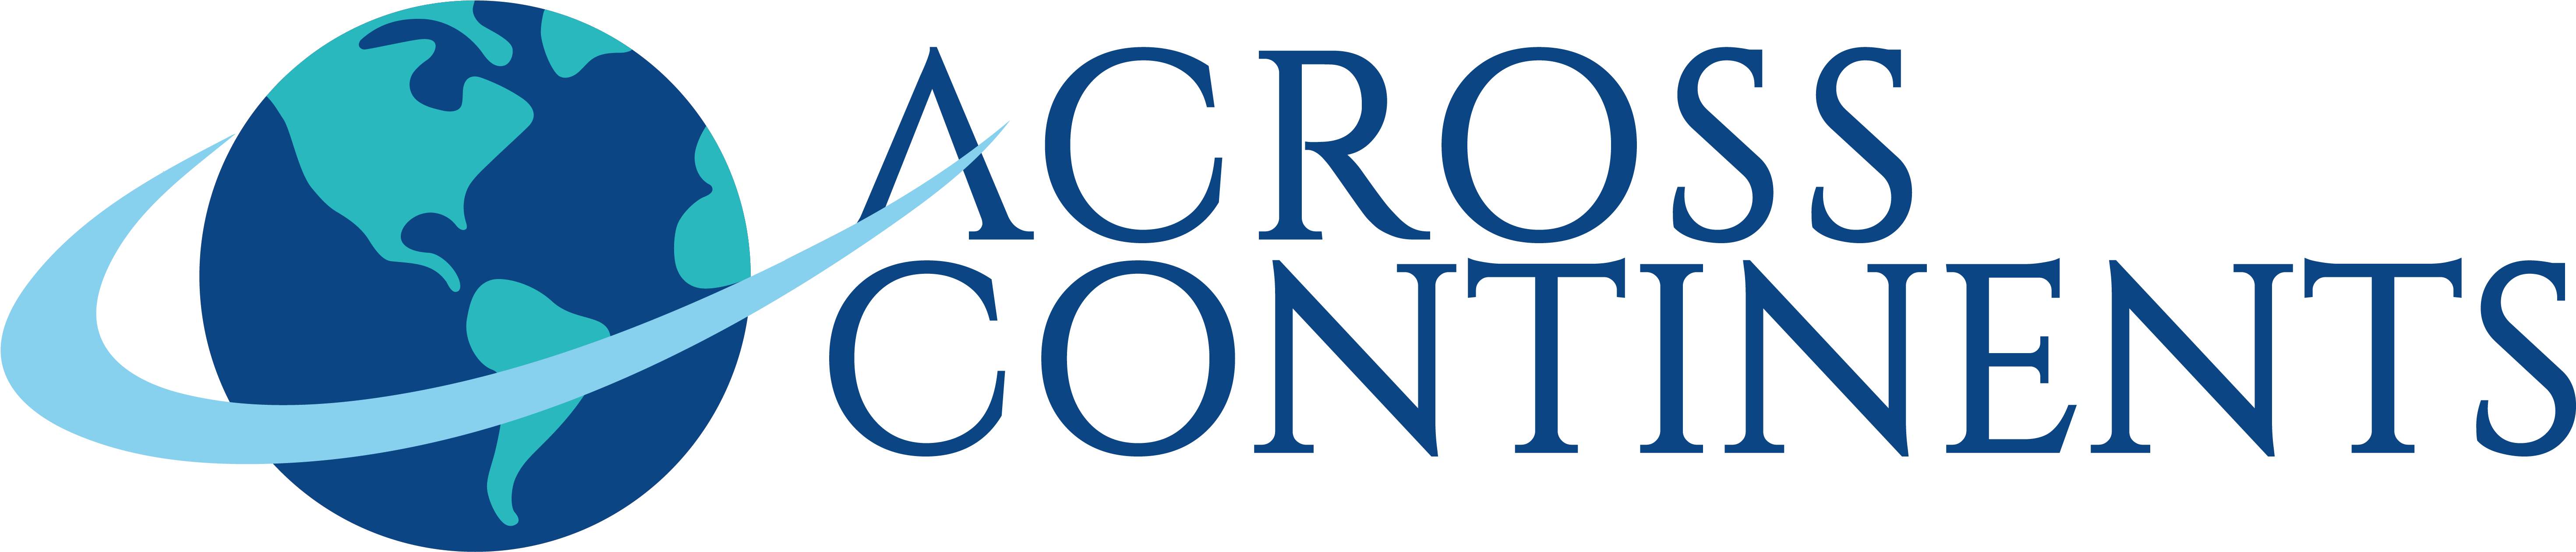 Across Continents Translation Logo - Translation (5995x1728)